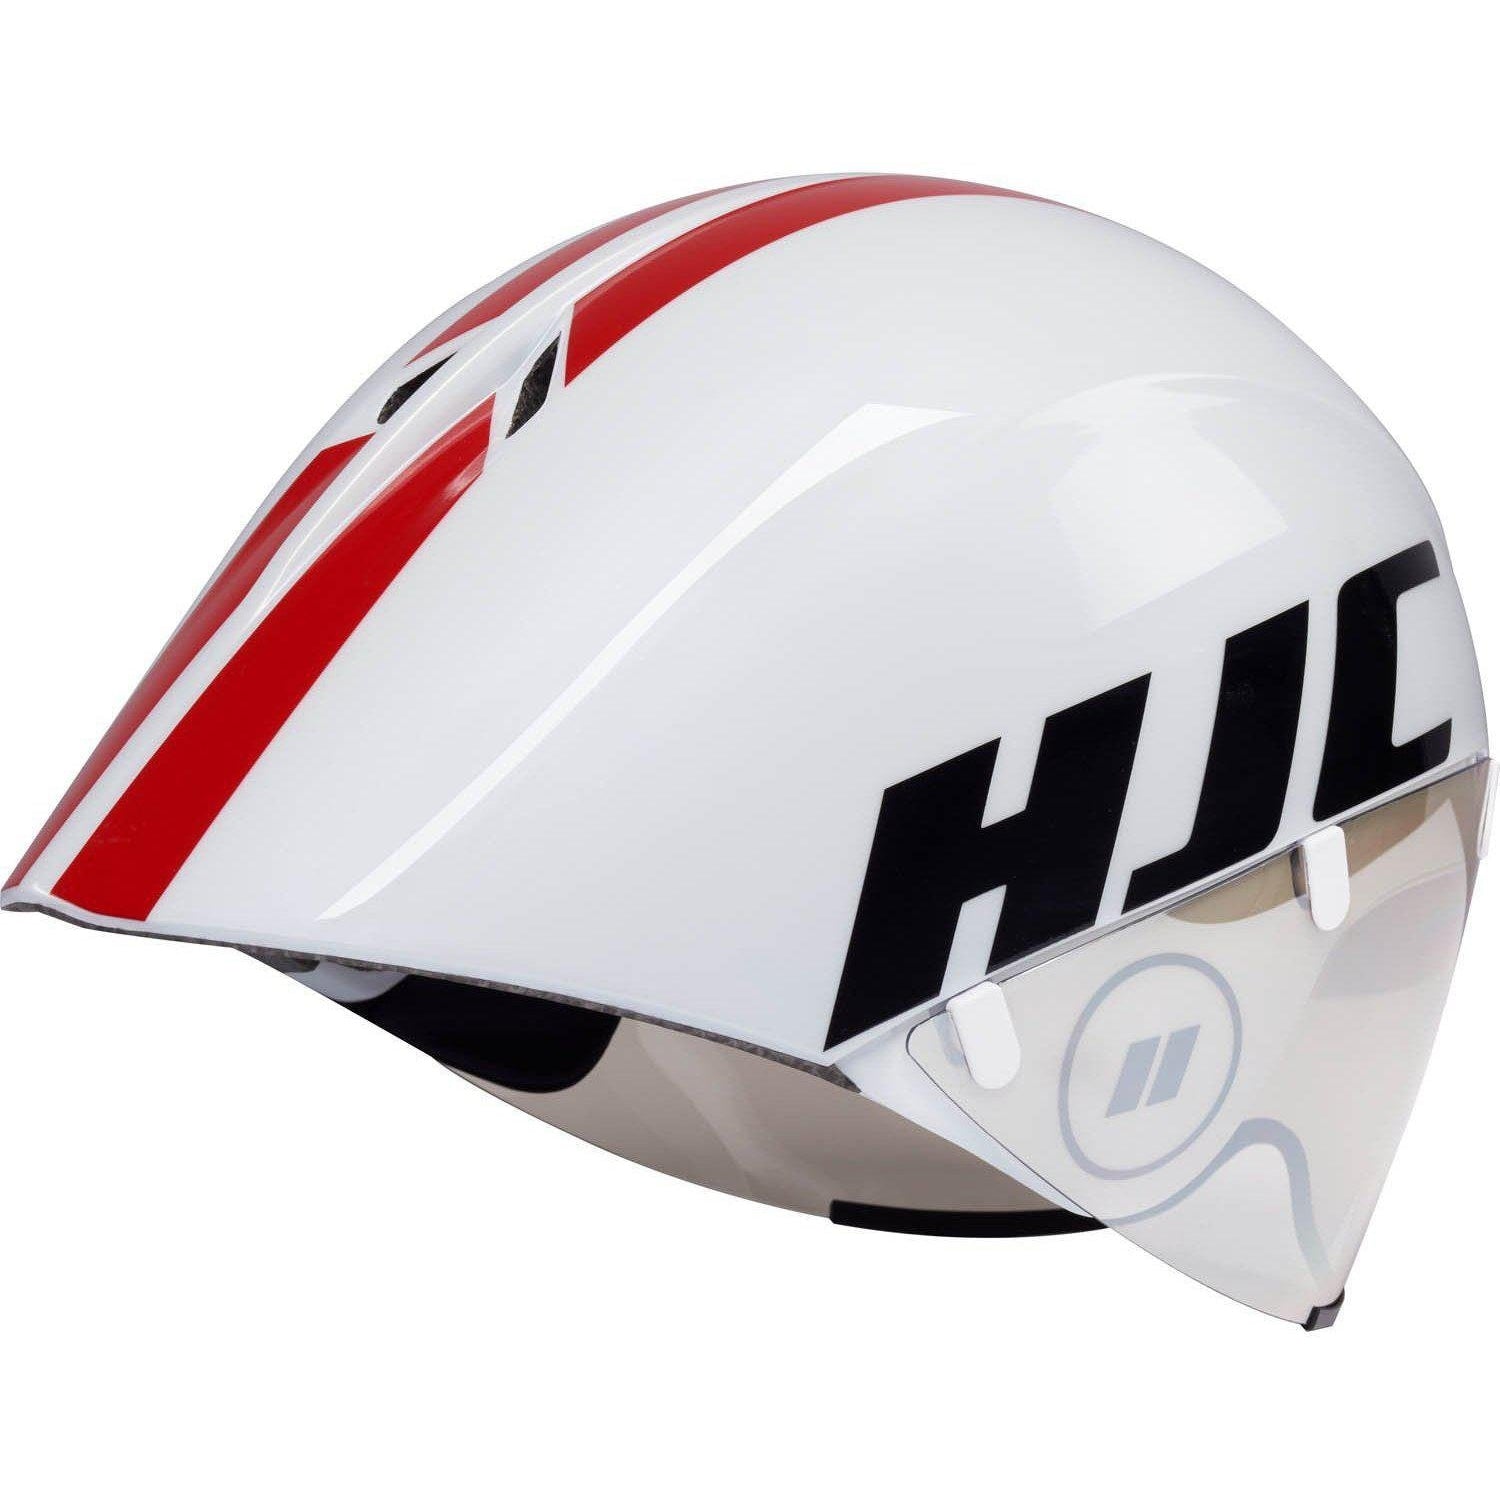 HJC Adwatt TT Aero Cycling Helmet Merlin Cycles